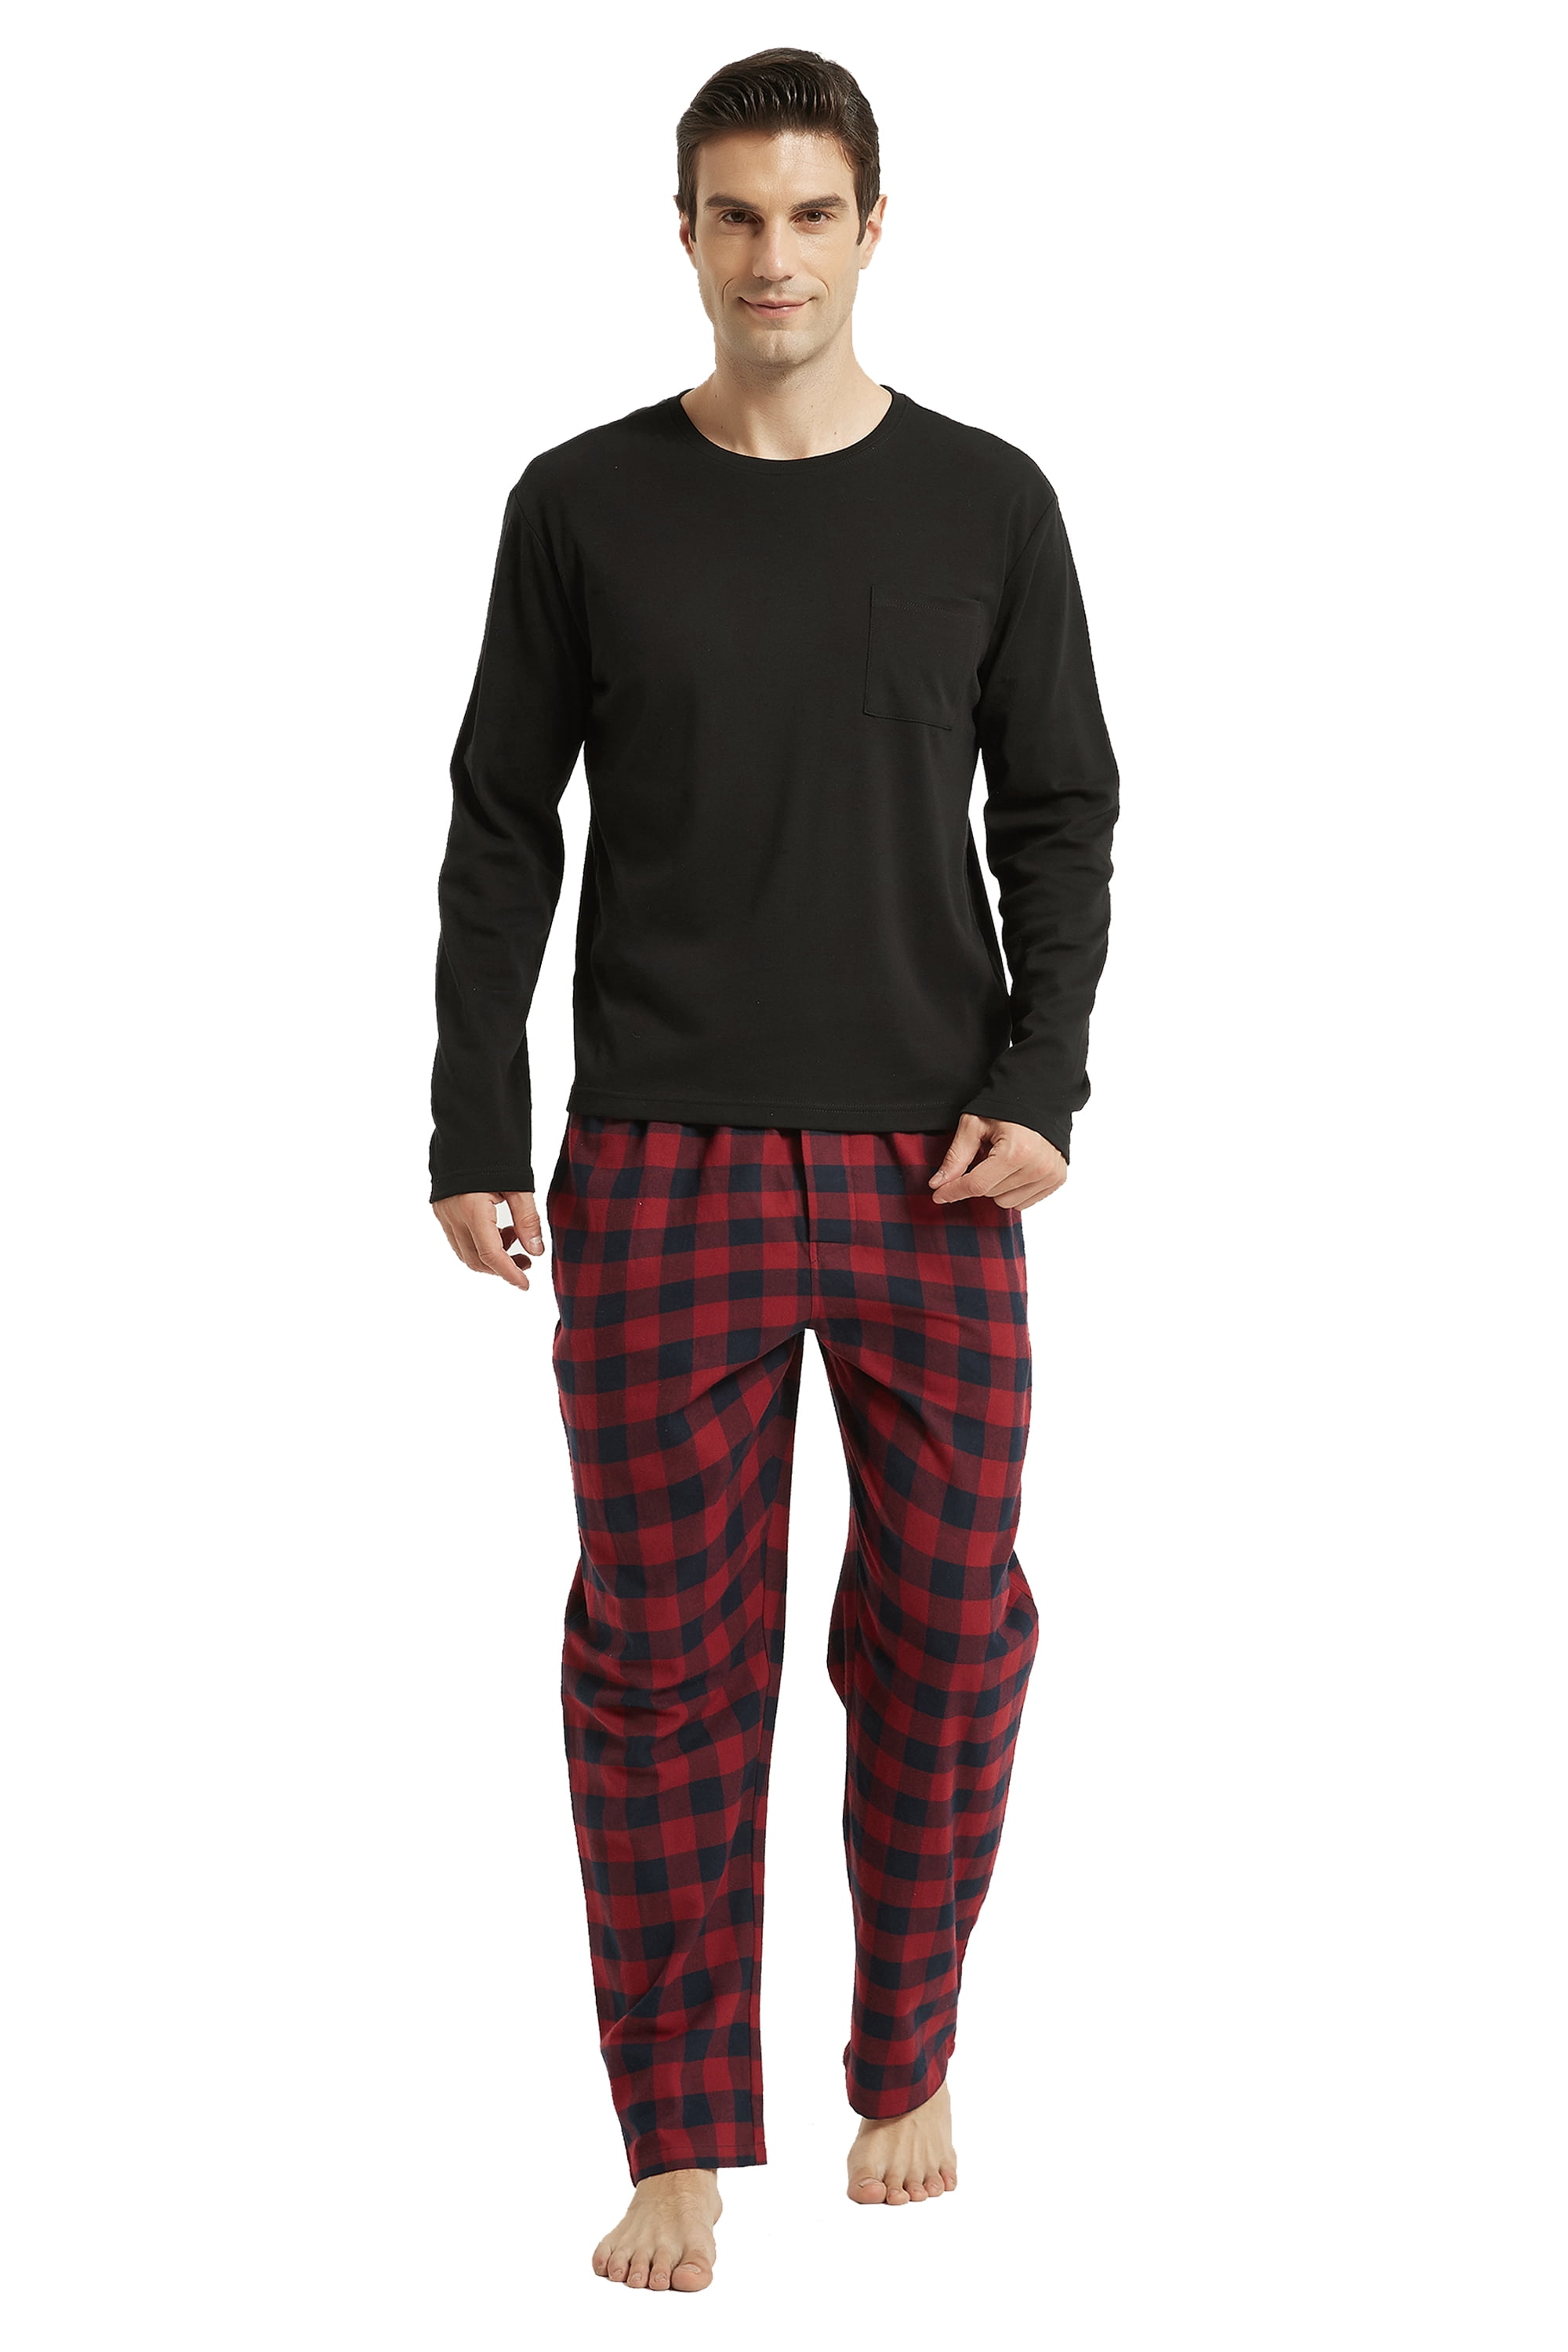 GLOBAL Men's Flannel Pajama Sets 100% Cotton Knit Top Flannel Pants ...